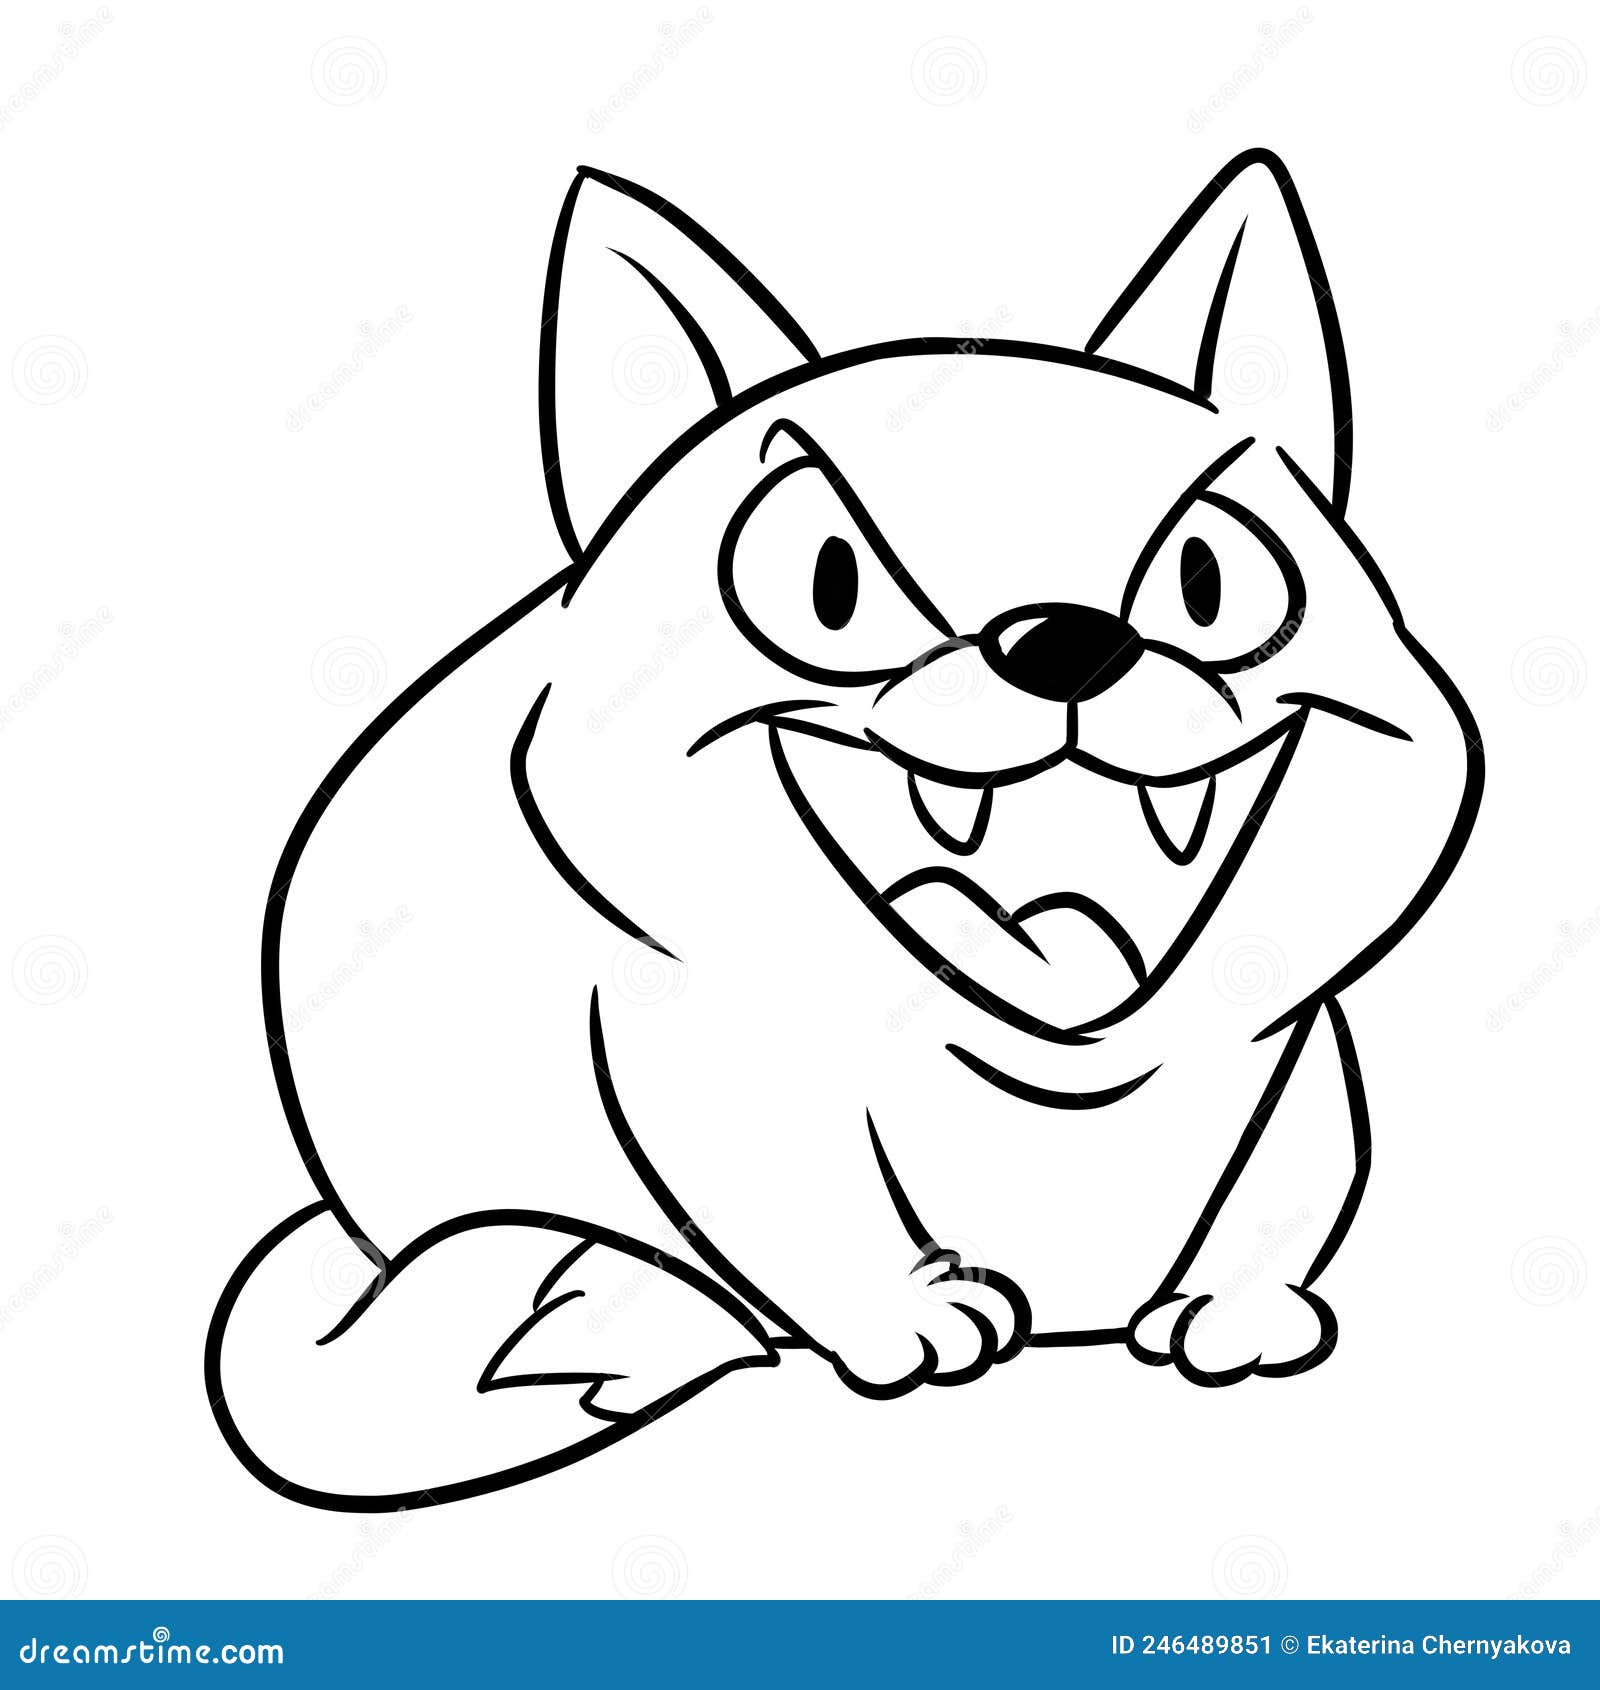 Predator cat coloring page cartoon illustration stock illustration